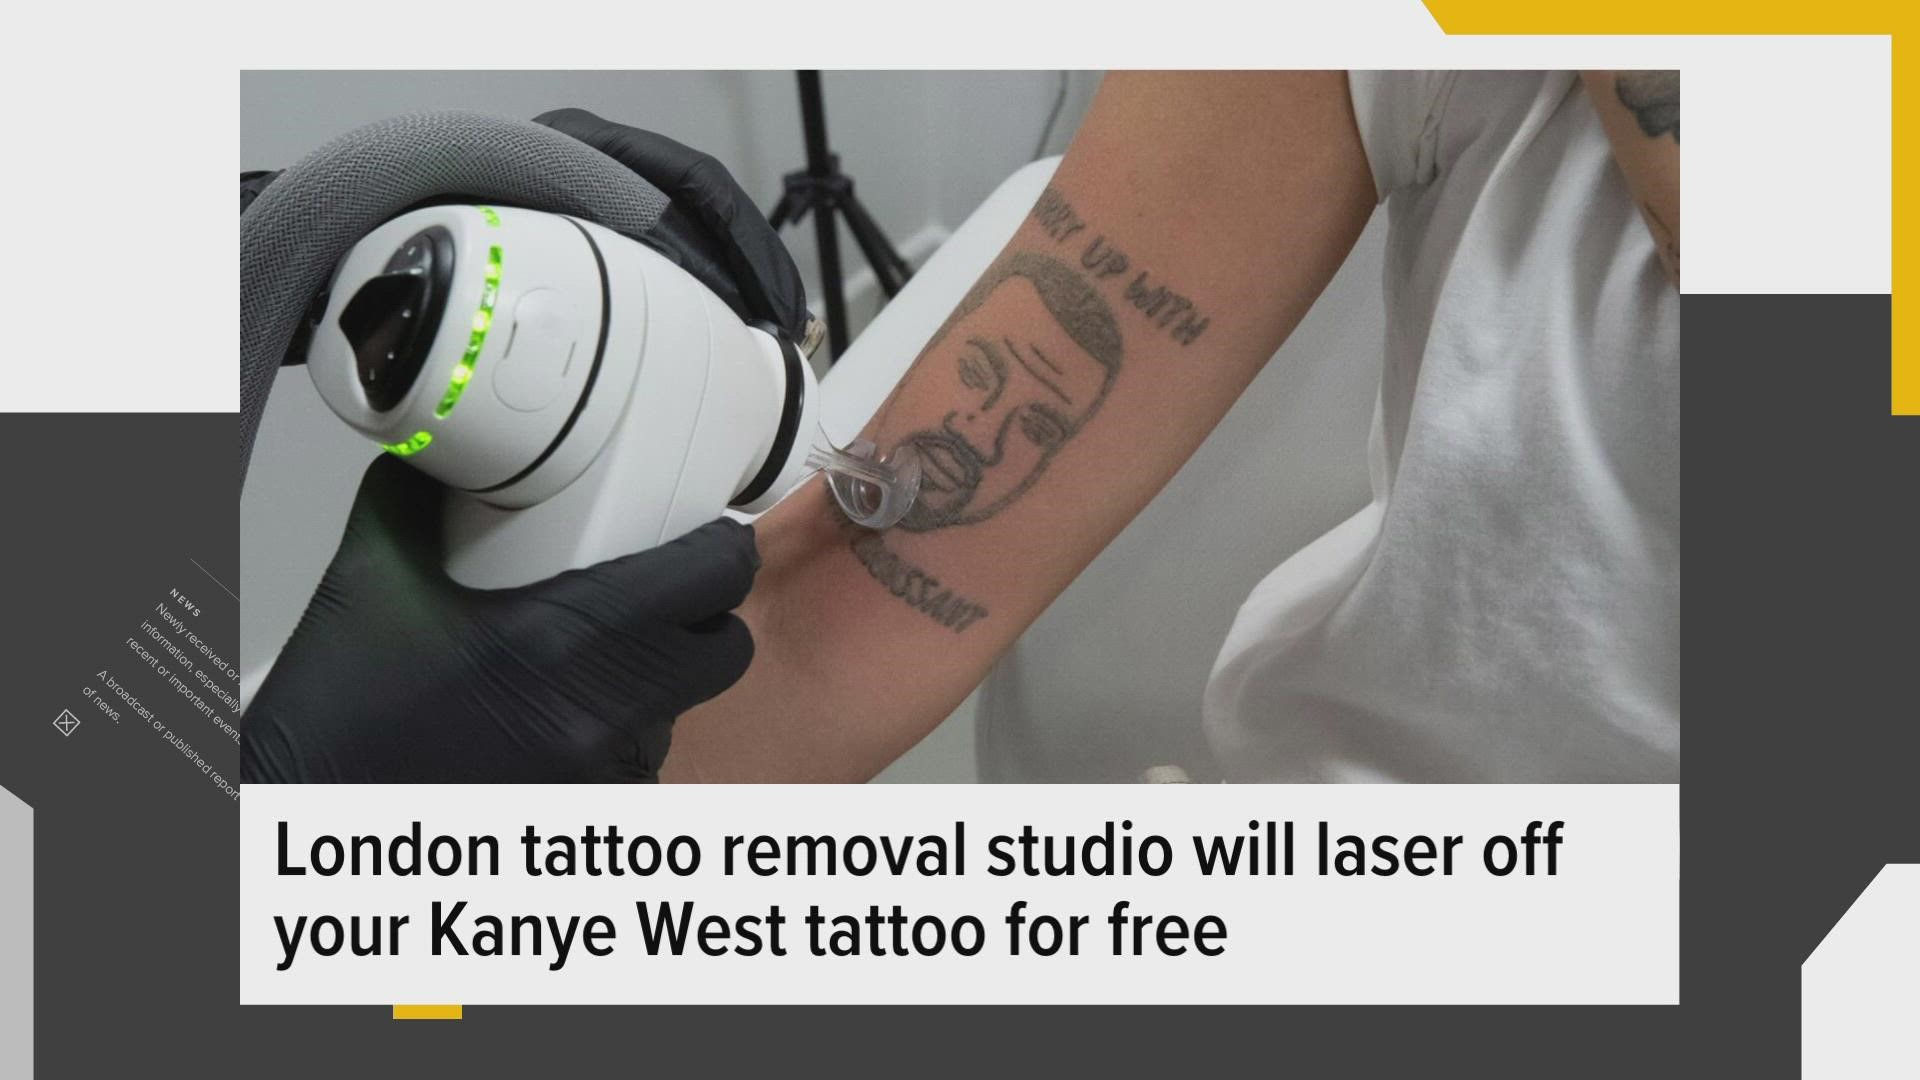 PicoSure Tattoo Removal Laser